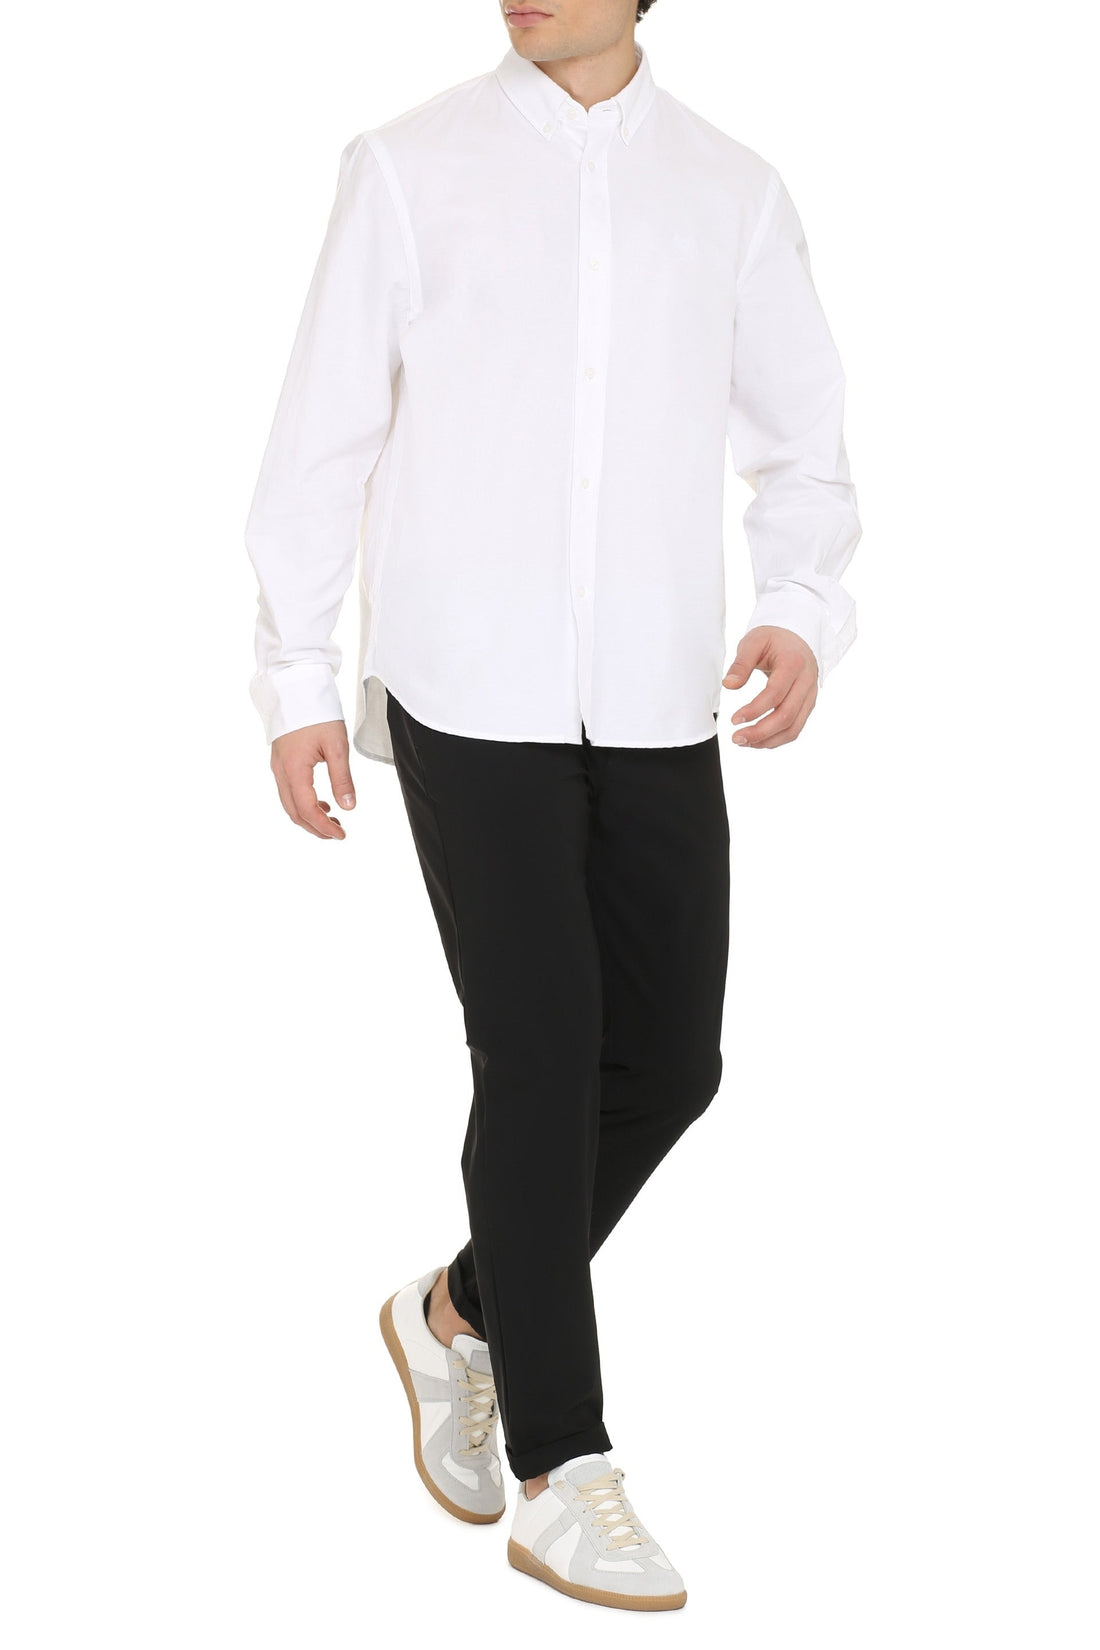 Kenzo-OUTLET-SALE-Button-down collar stretch cotton shirt-ARCHIVIST